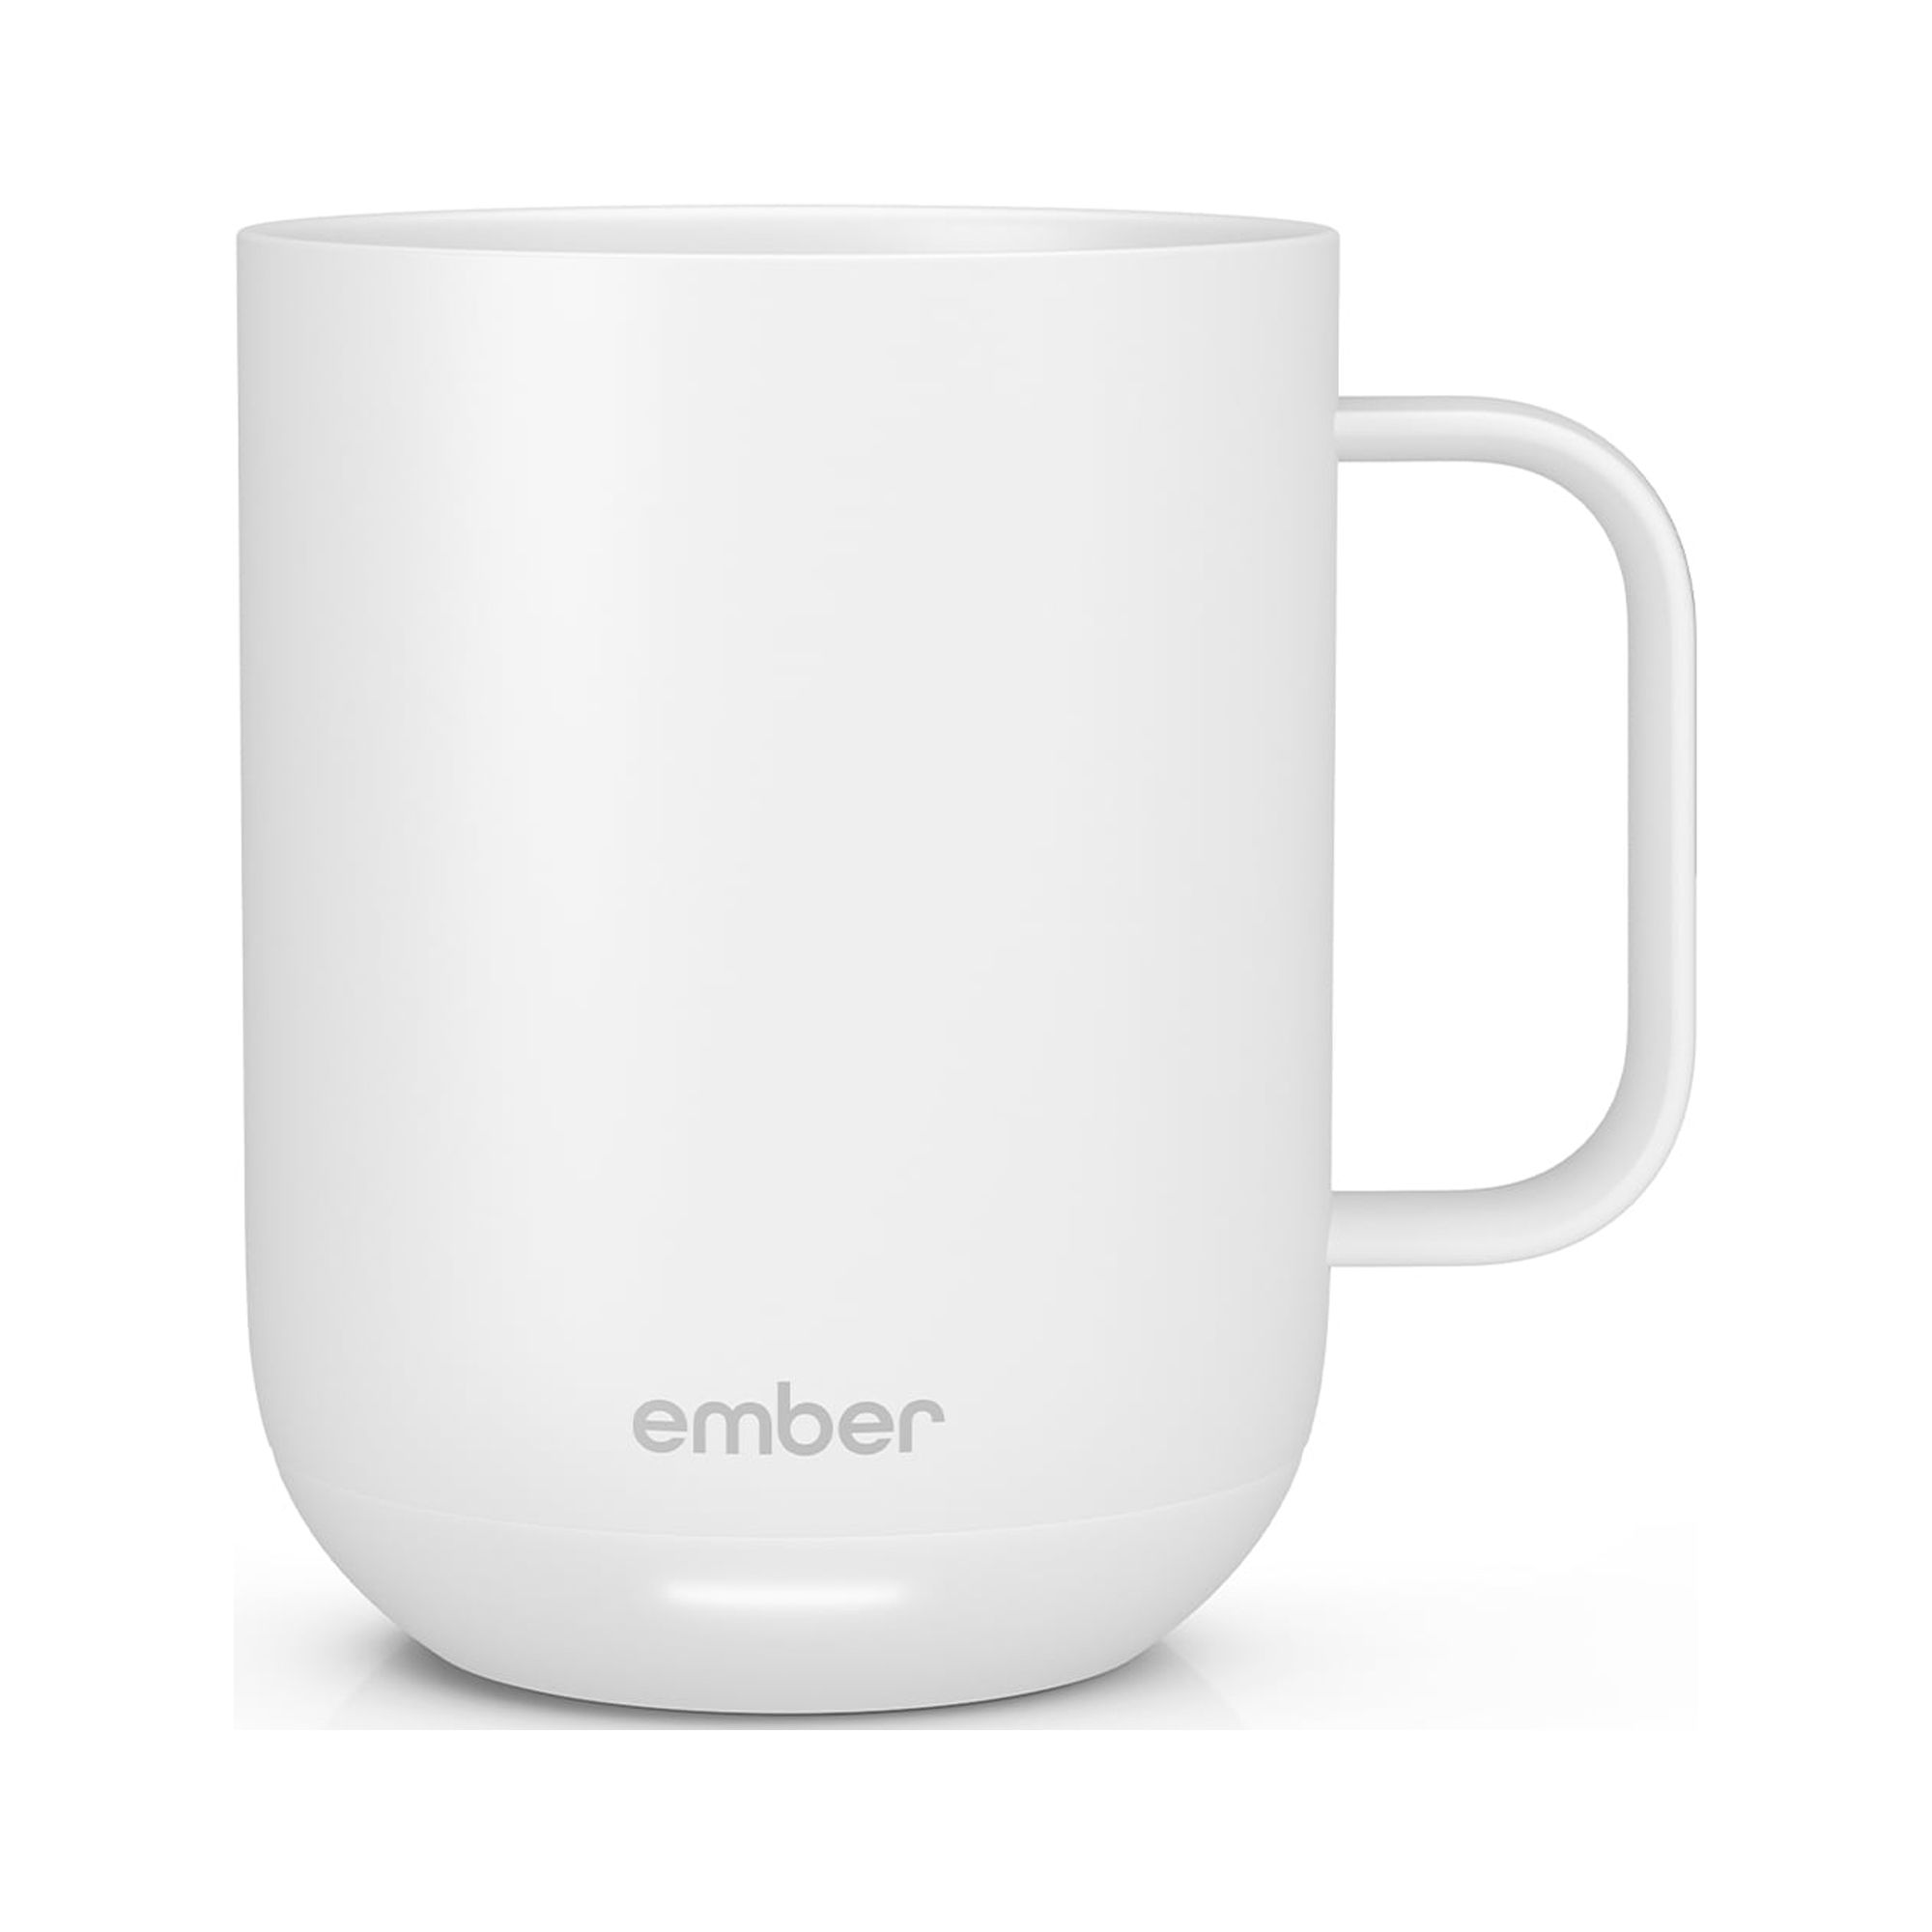 Ember Temperature Control Smart Mug 2, 10 oz, White, 1.5-hr Battery Life - App Controlled Heated Coffee Mug - image 1 of 6